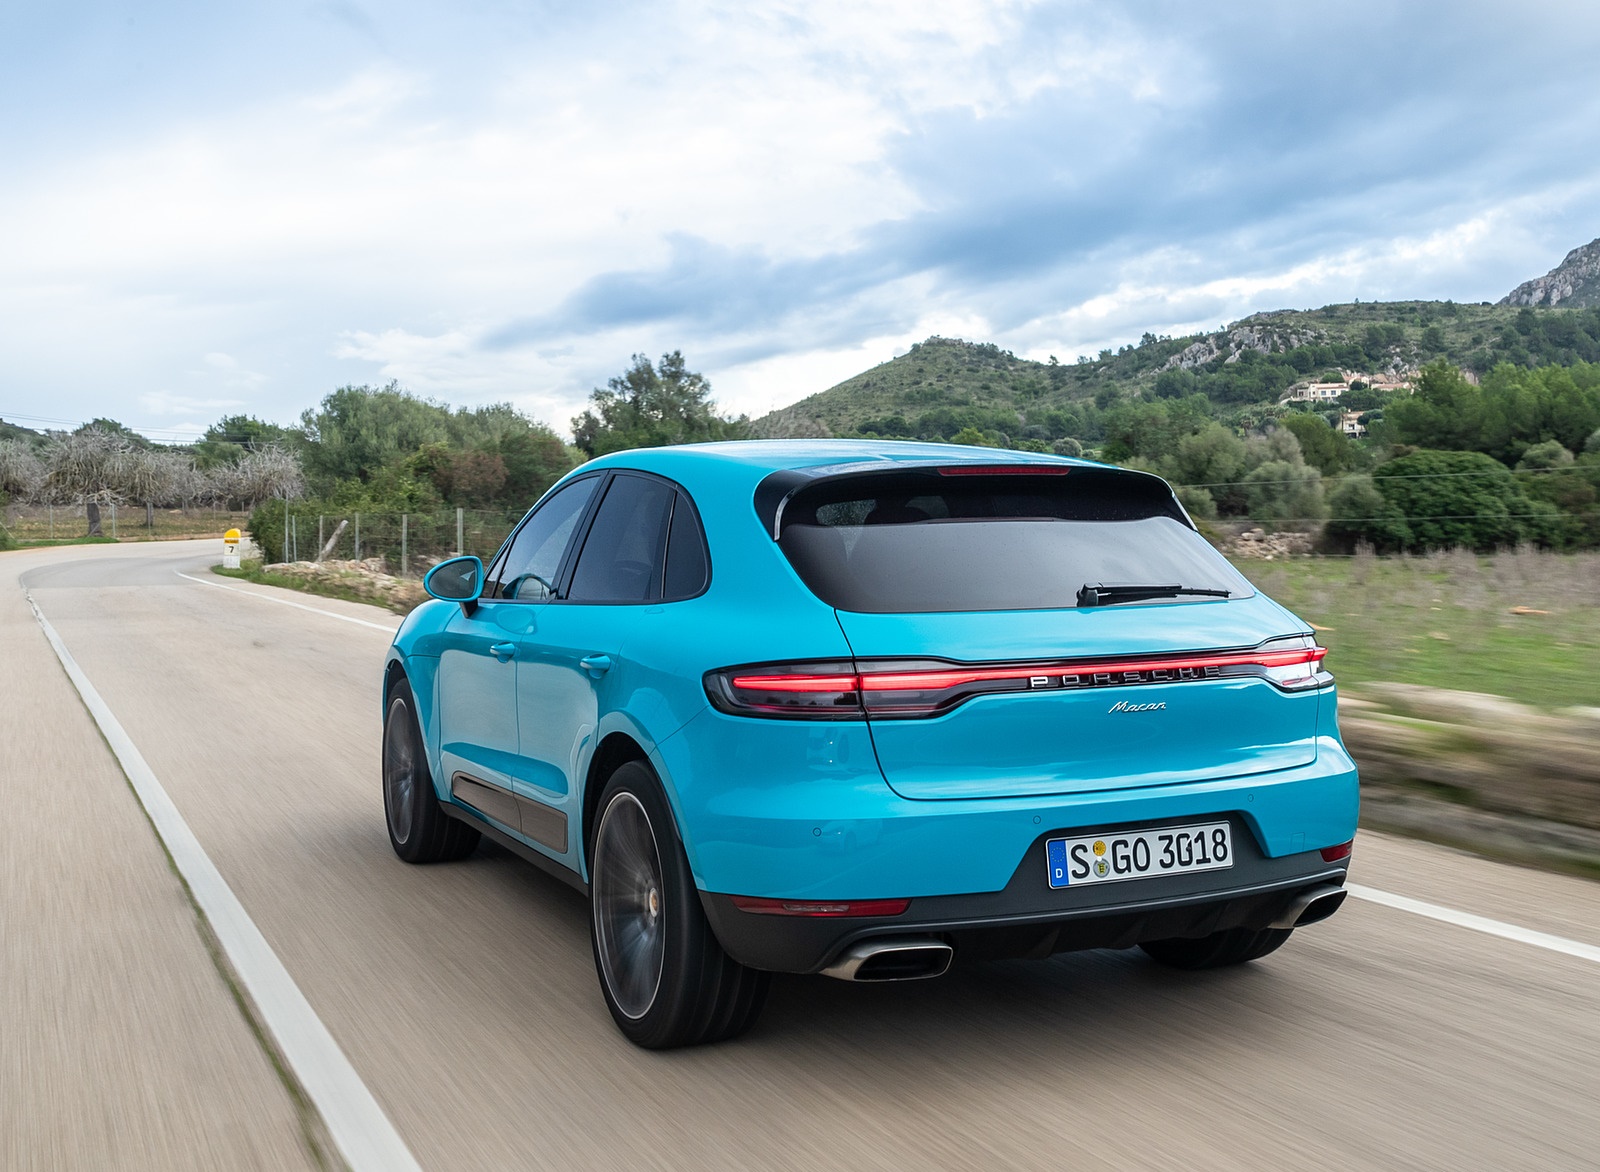 2019 Porsche Macan S (Color: Miami Blue) Rear Three-Quarter Wallpapers #30 of 112